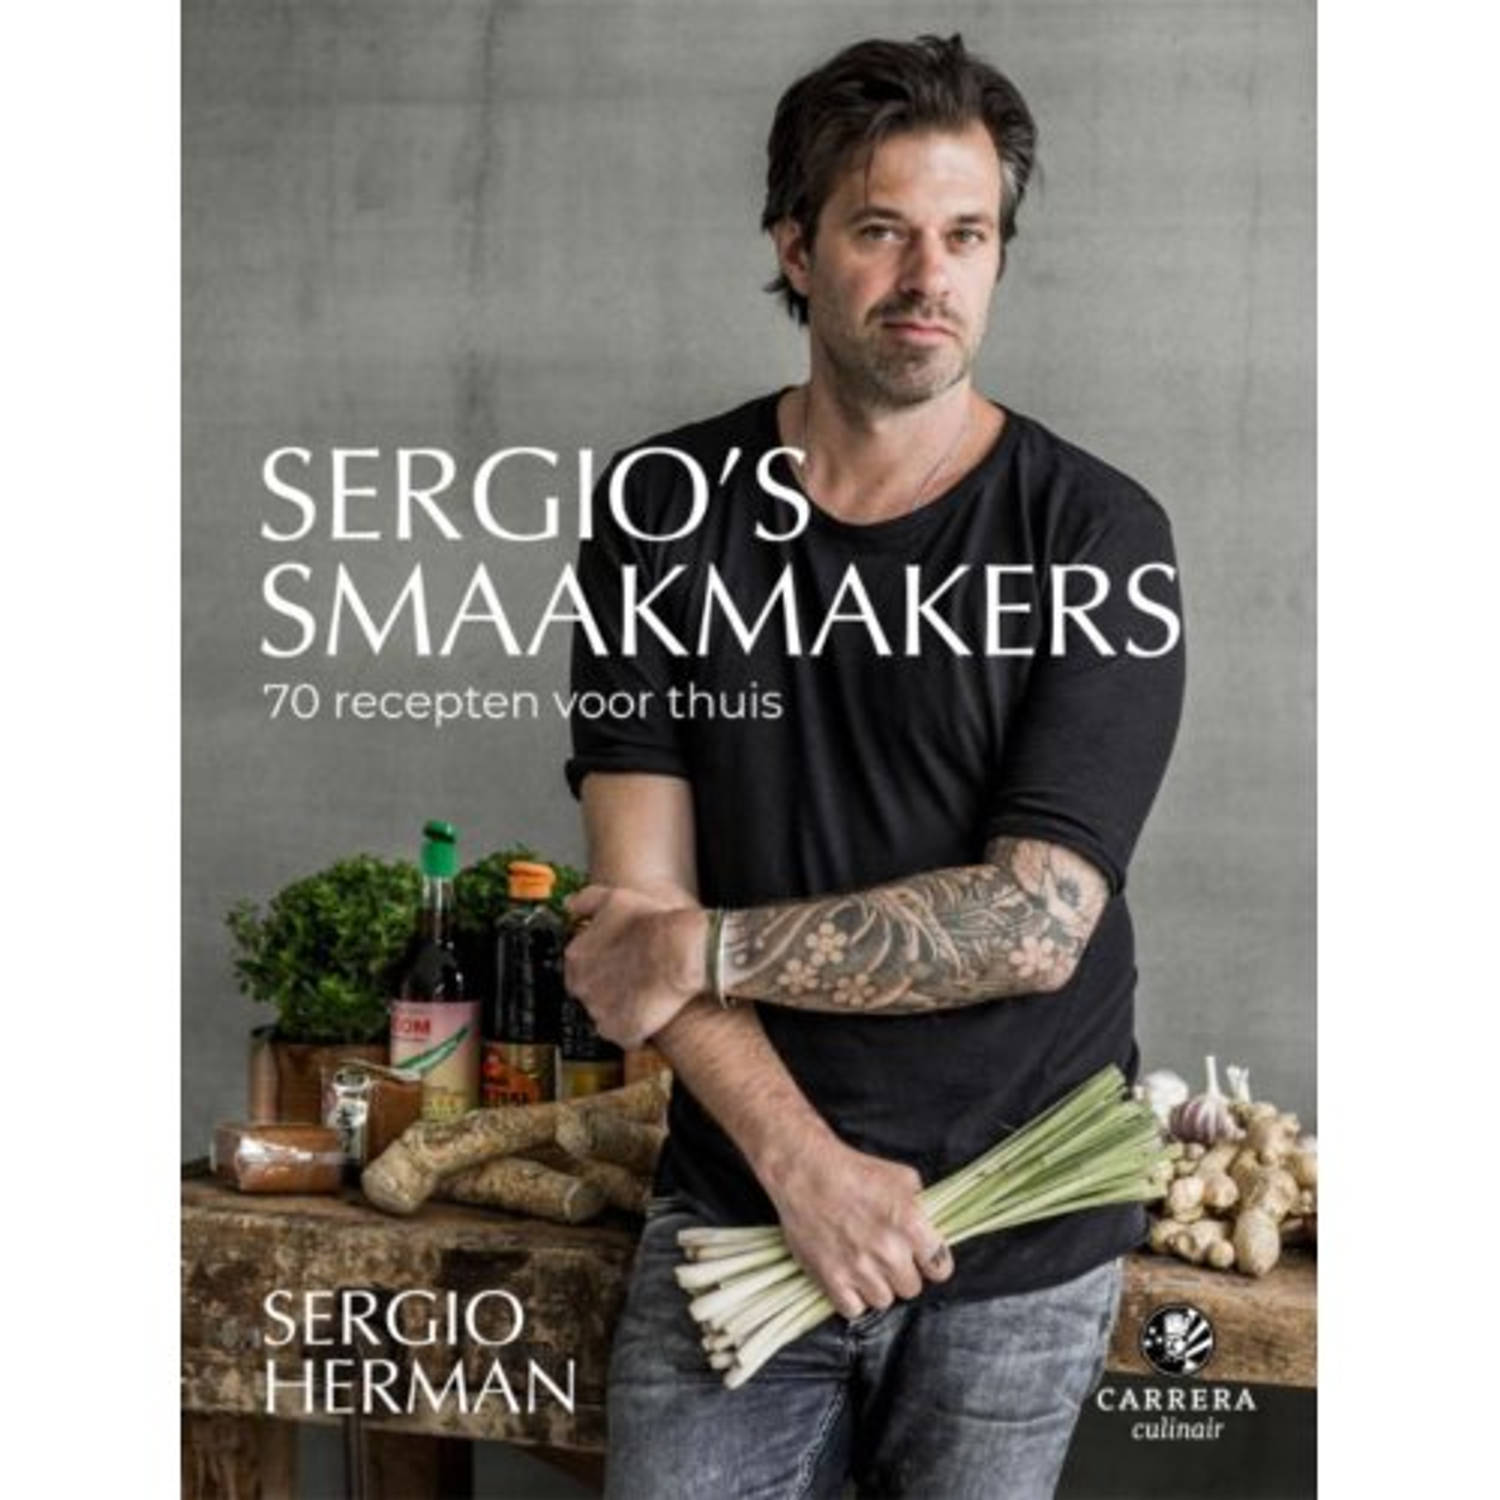 Sergio's Smaakmakers